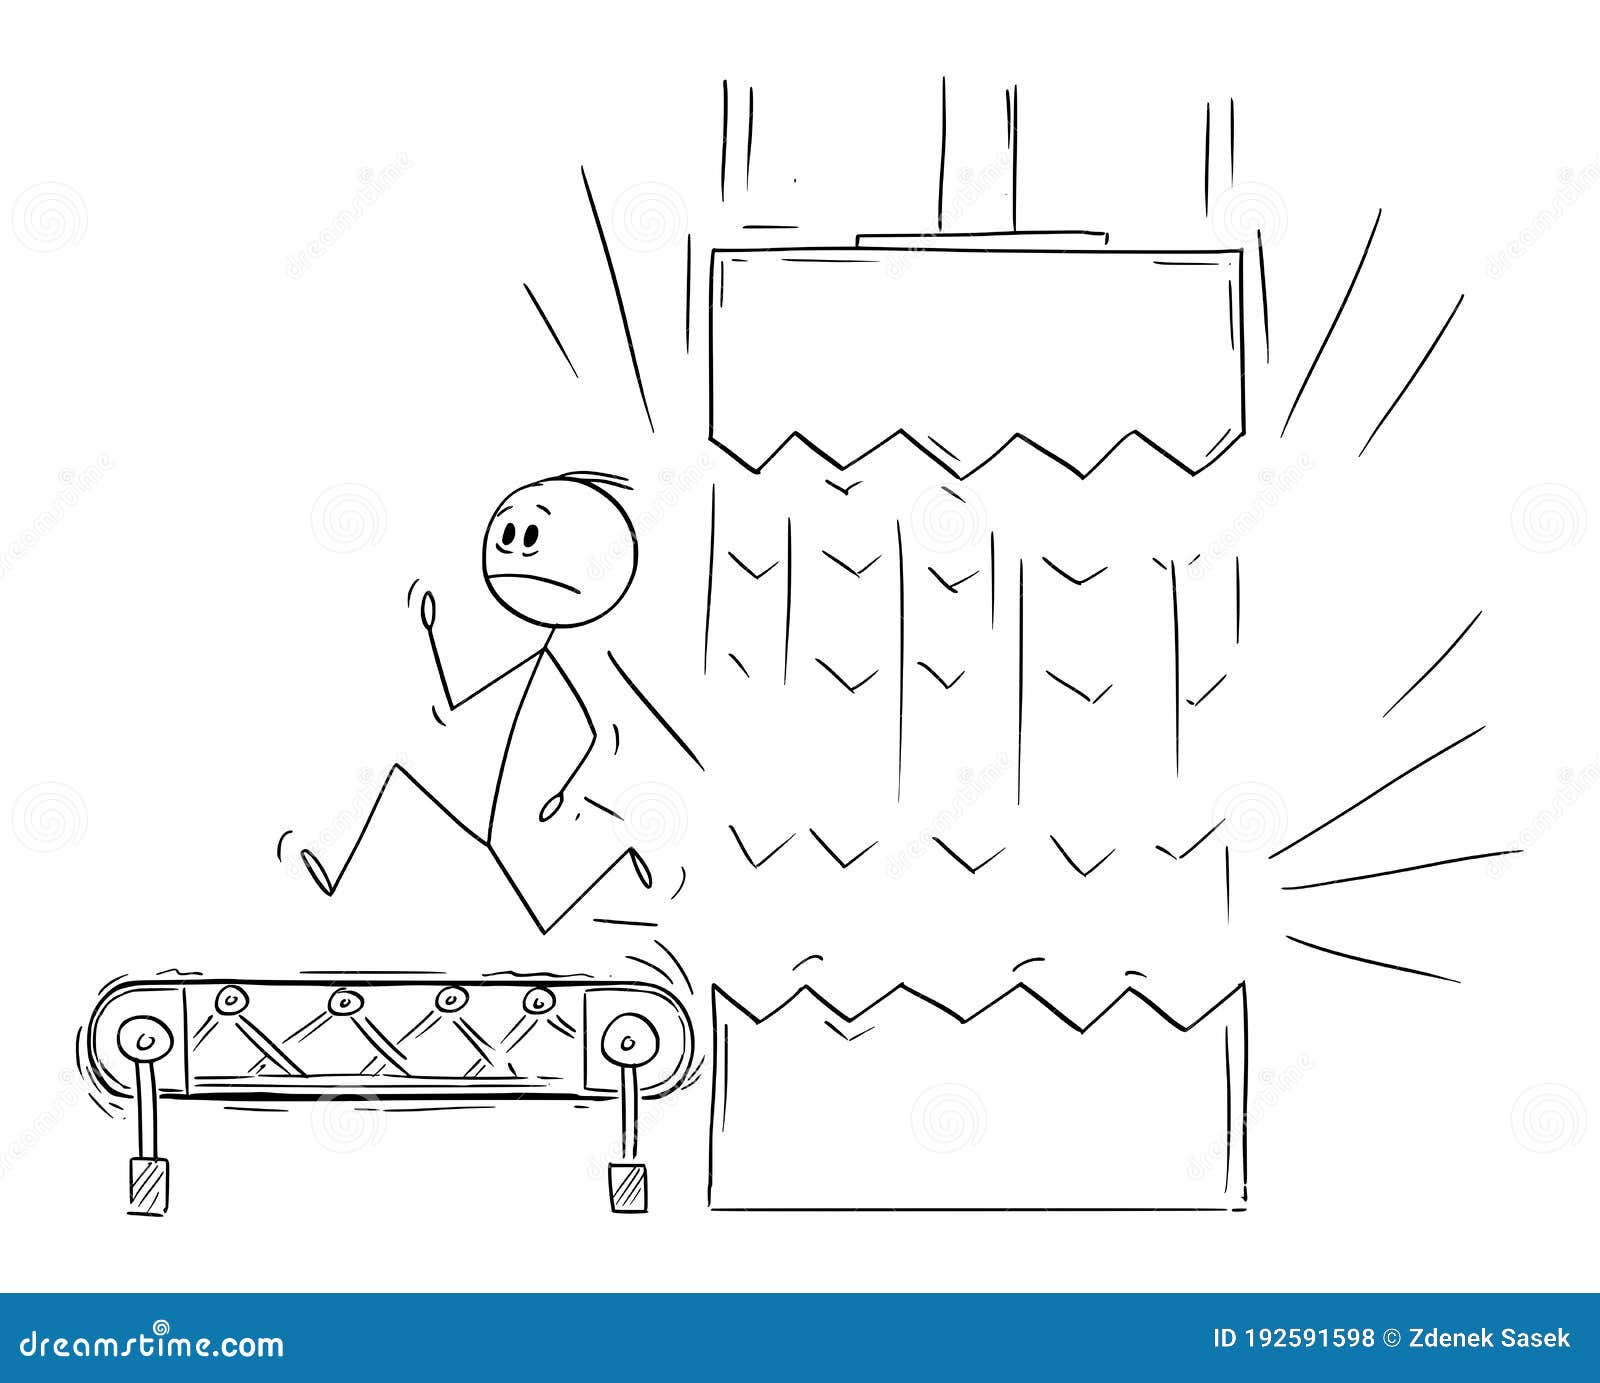 Vector Cartoon Illustration of Man or Businessman Running on Conveyor Belt  or Running Machine from Crushing Machine Stock Vector - Illustration of  figure, economy: 192591598